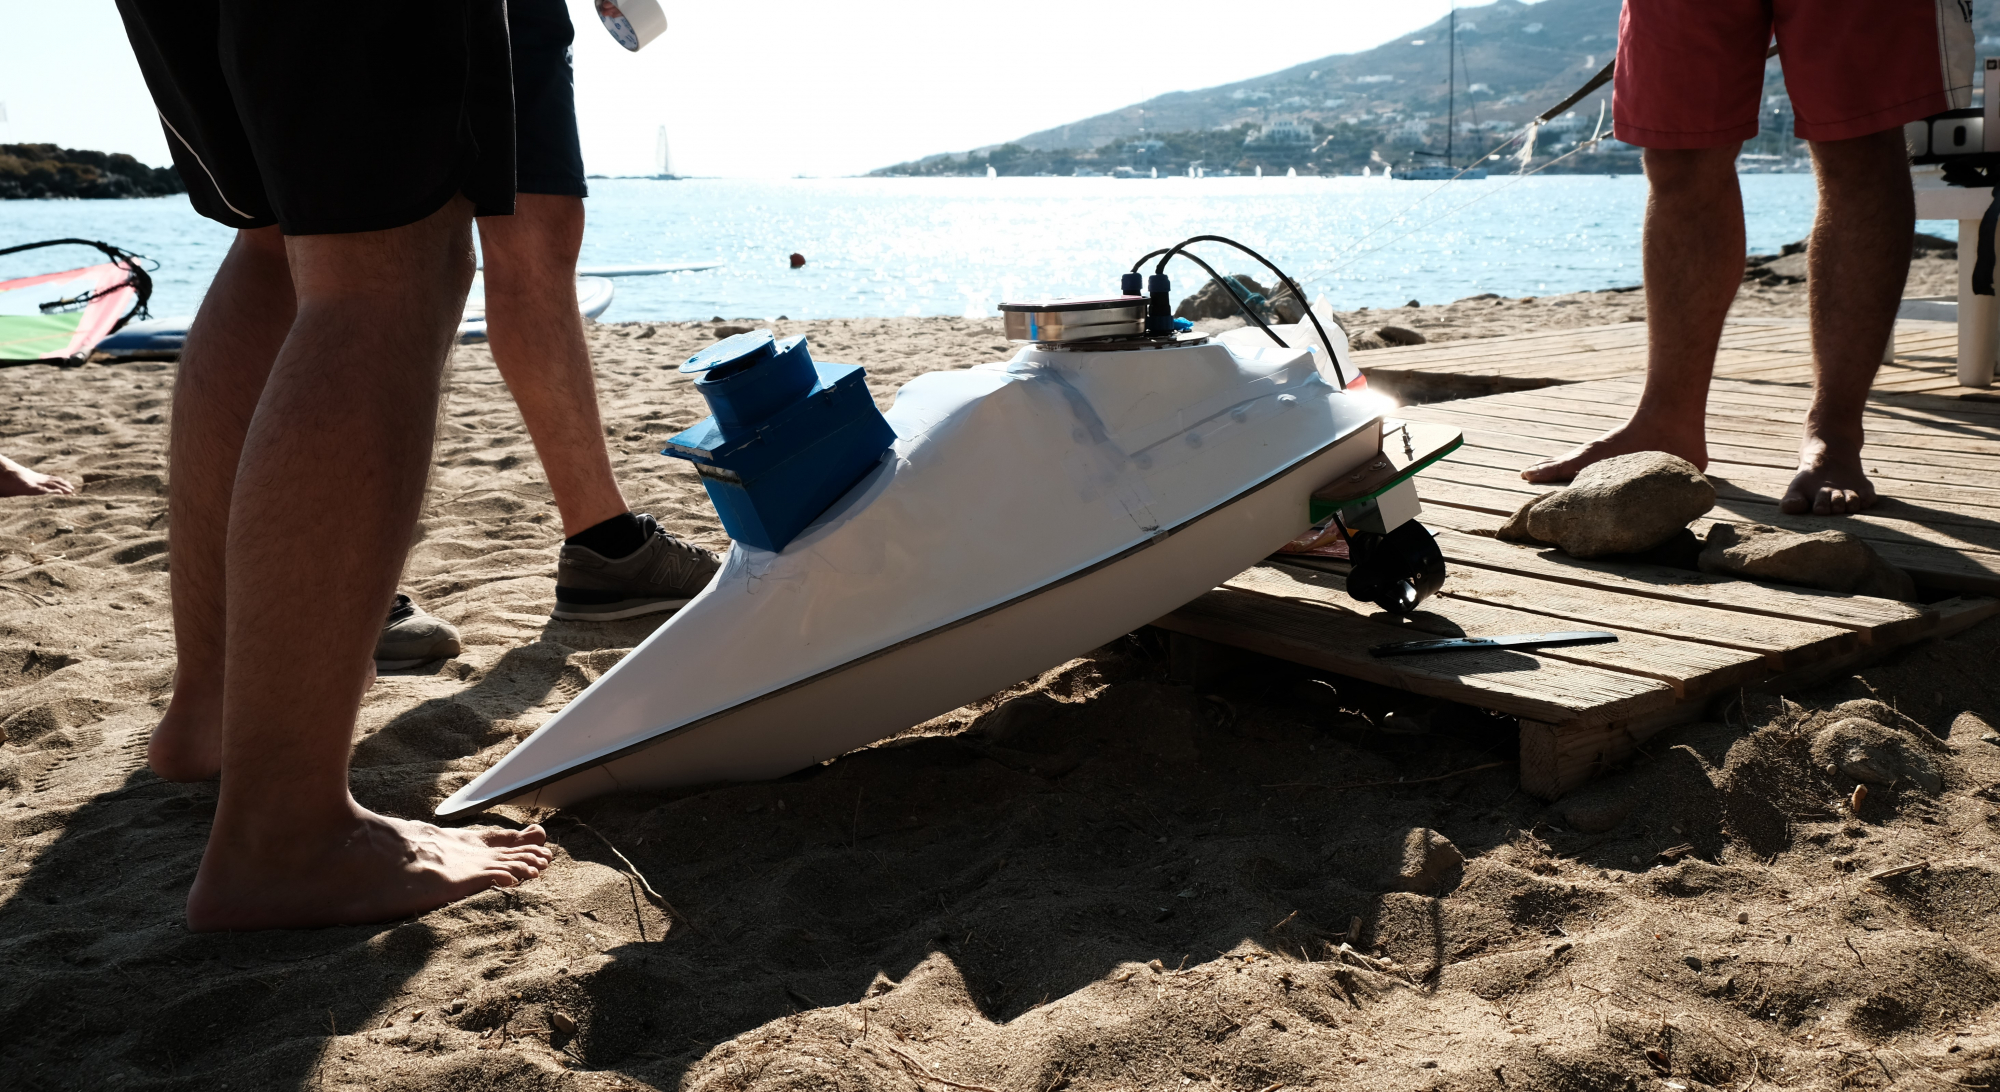 Aegean Ro-Boat Race: Διεθνής διαγωνισμός ρομποτικών σκαφών στη Σύρο